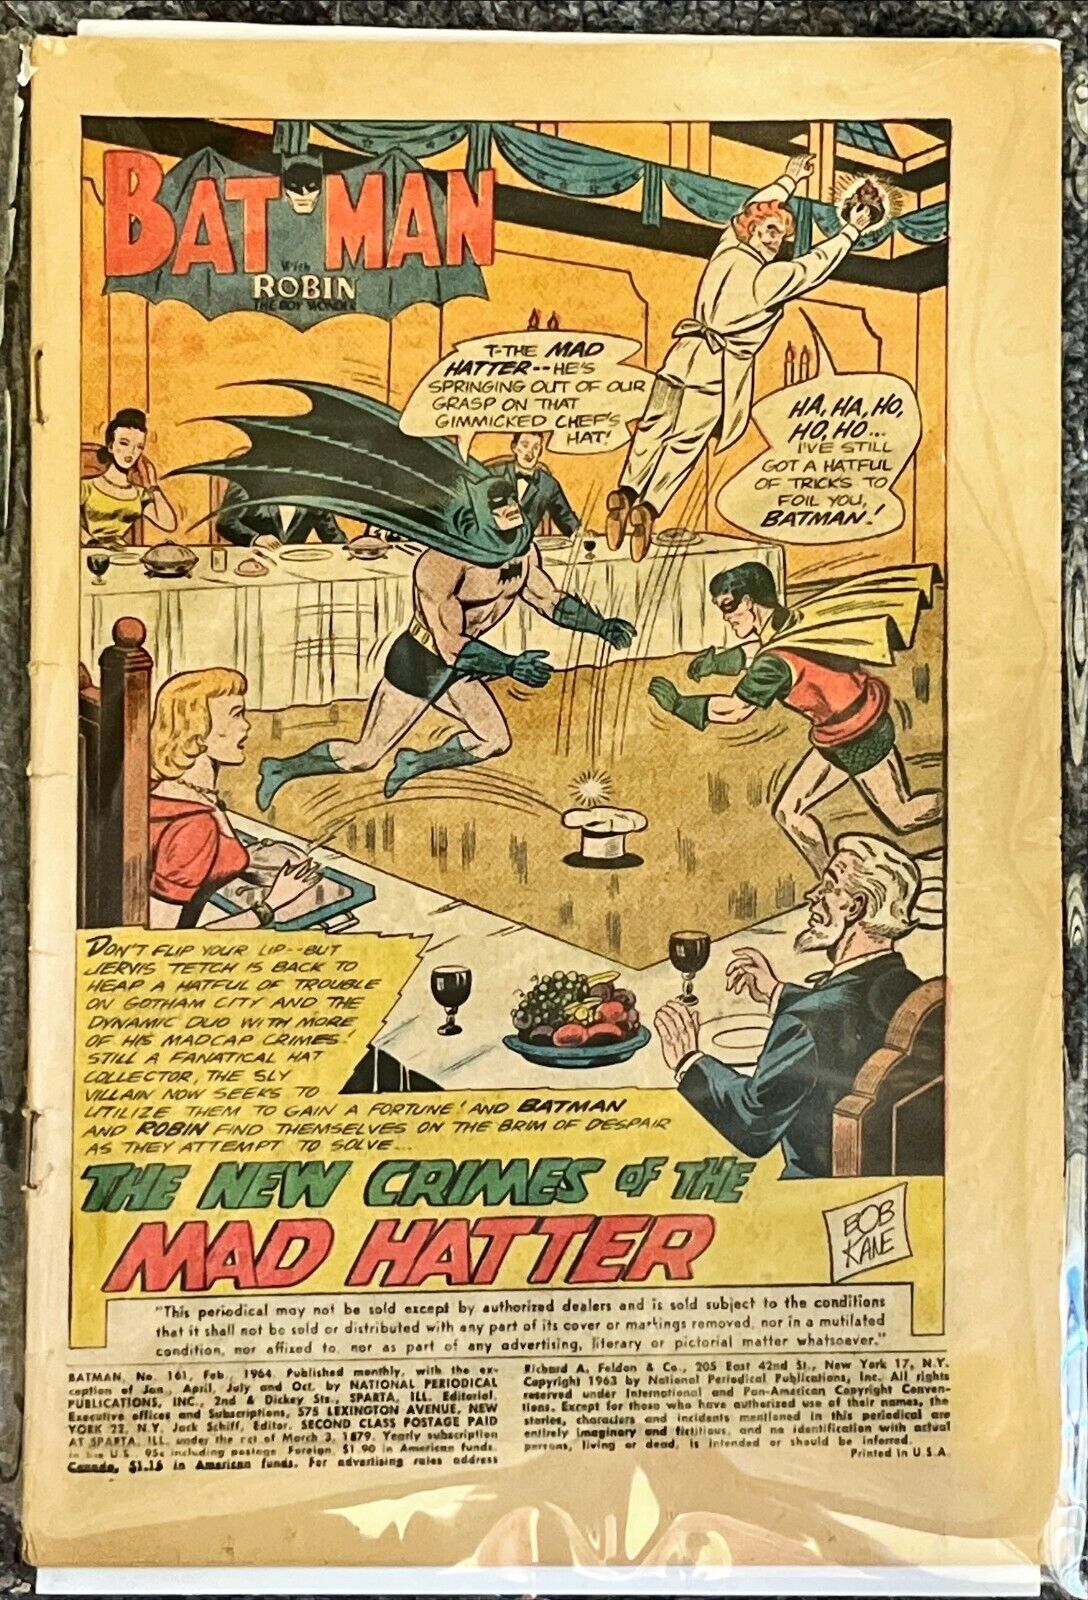 Batman #161 (1940)